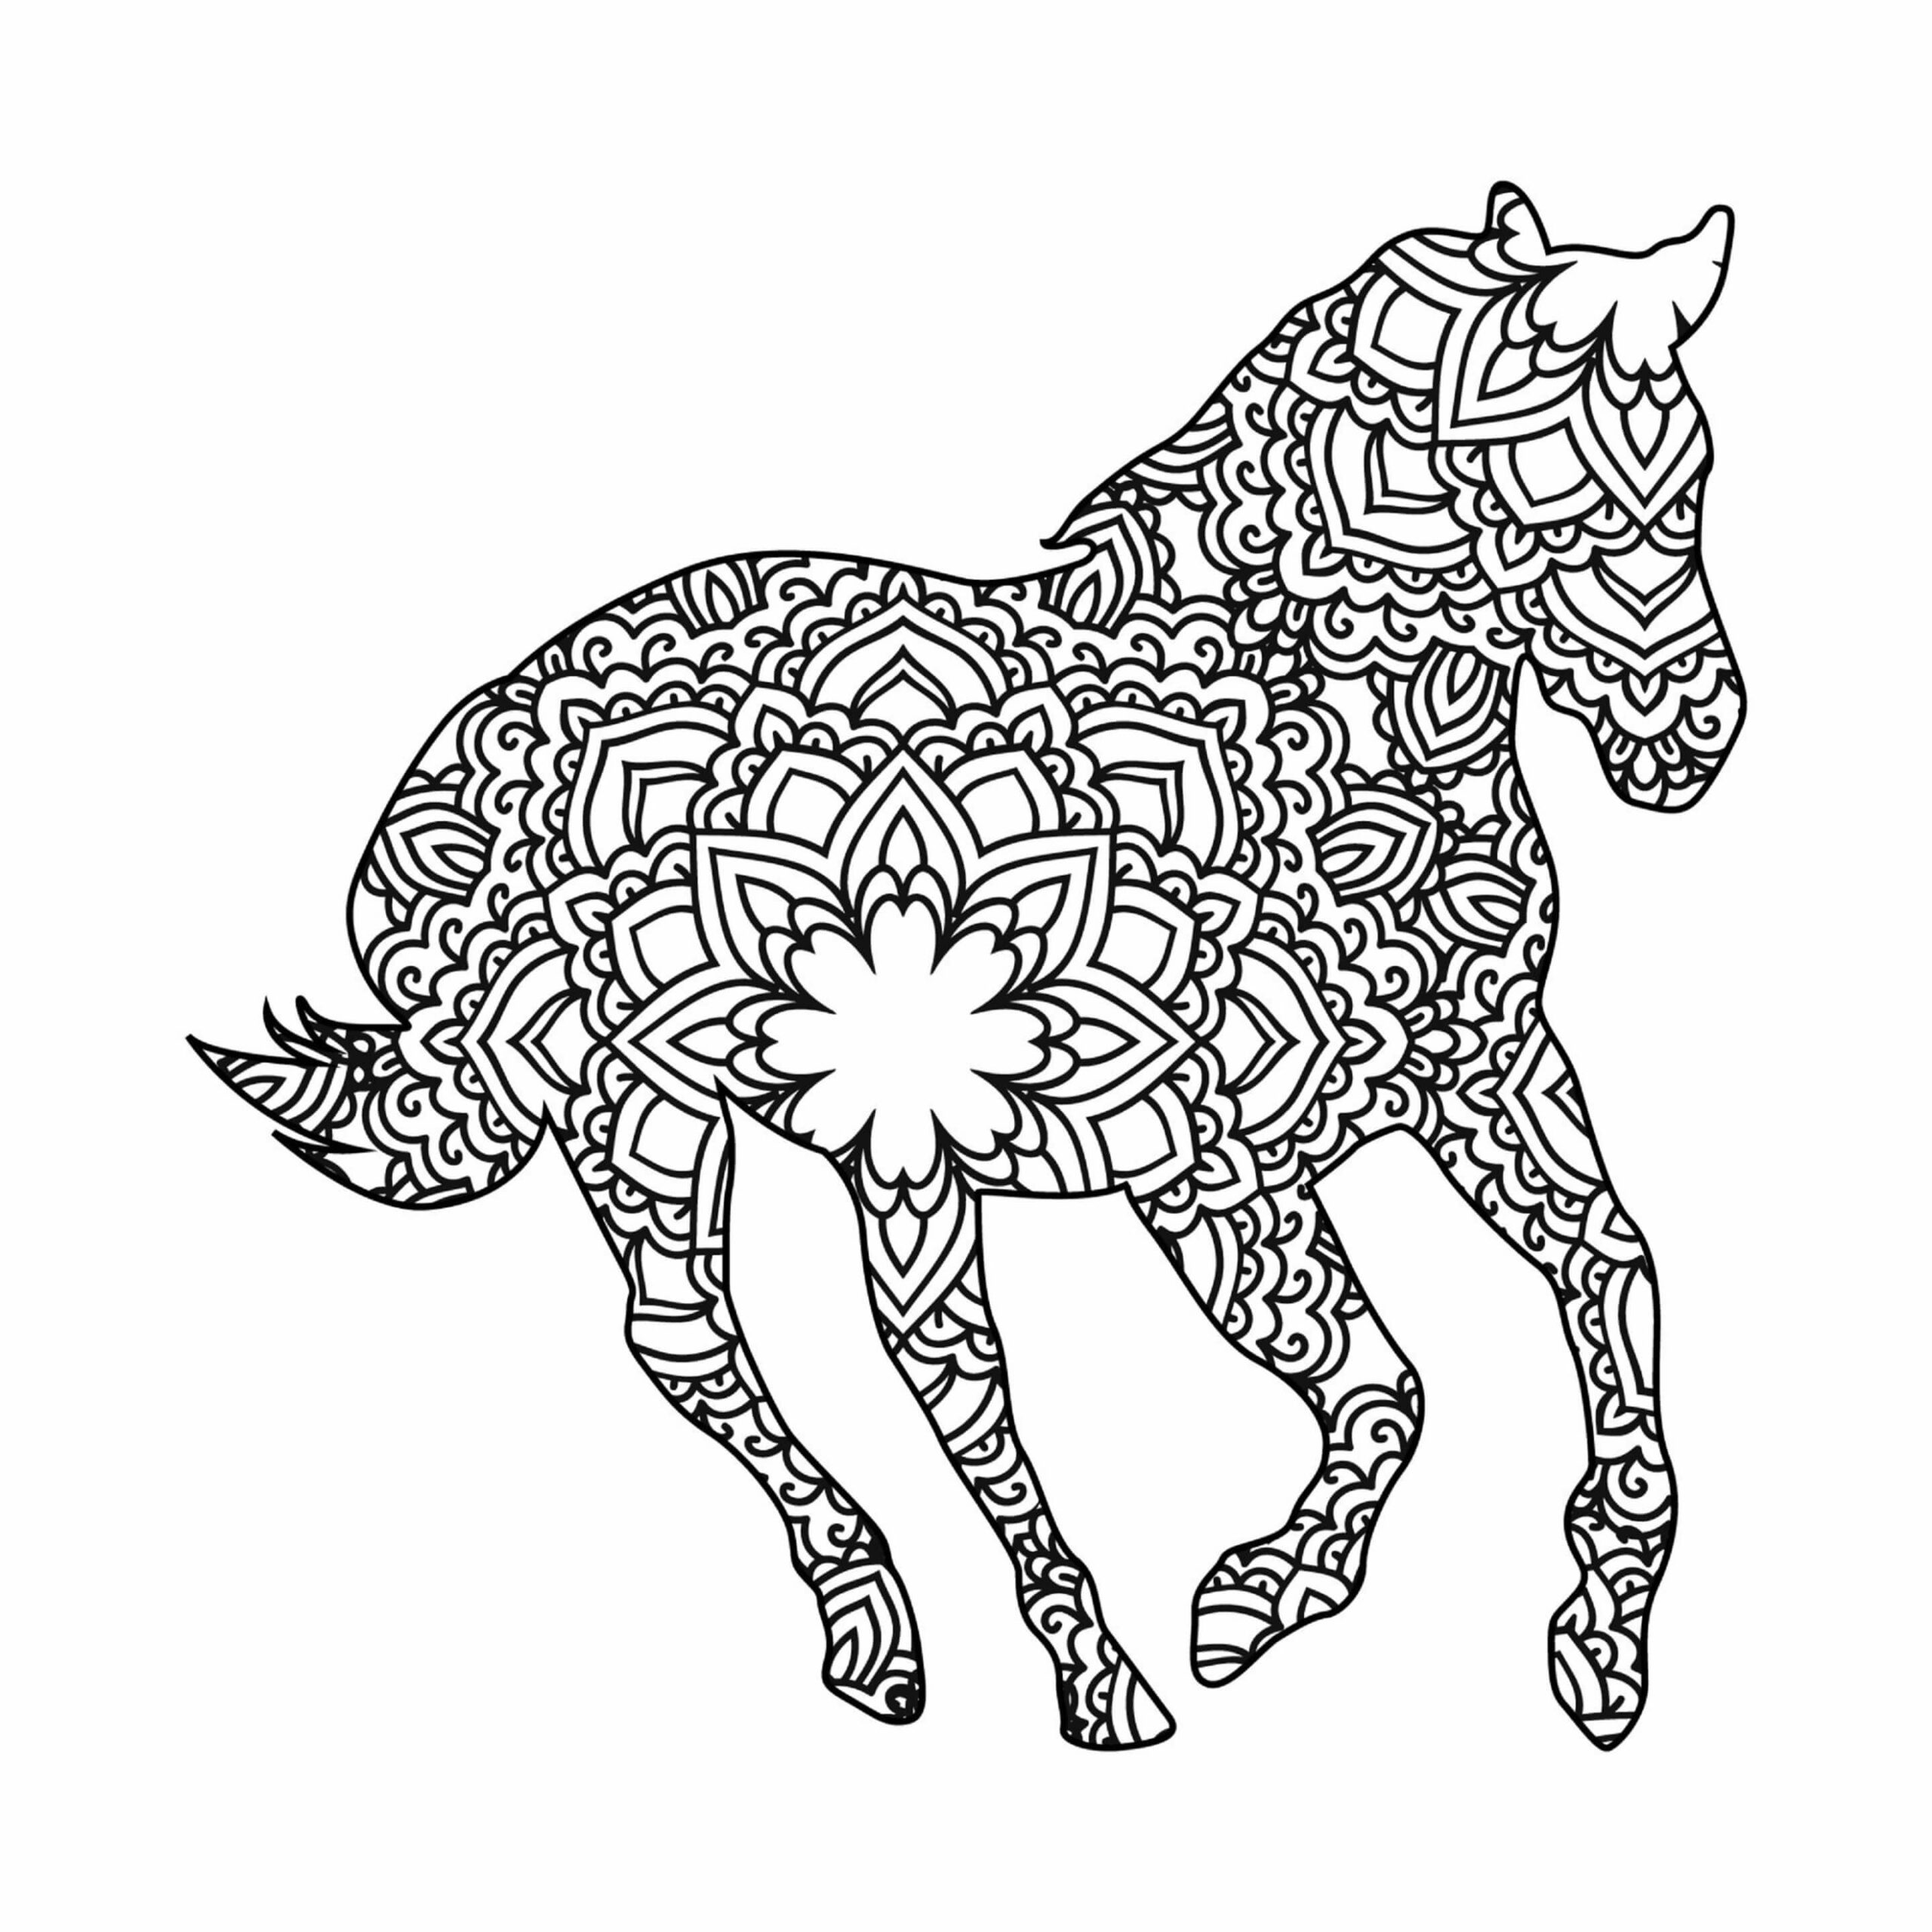 Mandala Horse Coloring Page - Sheet 10 Mandalas